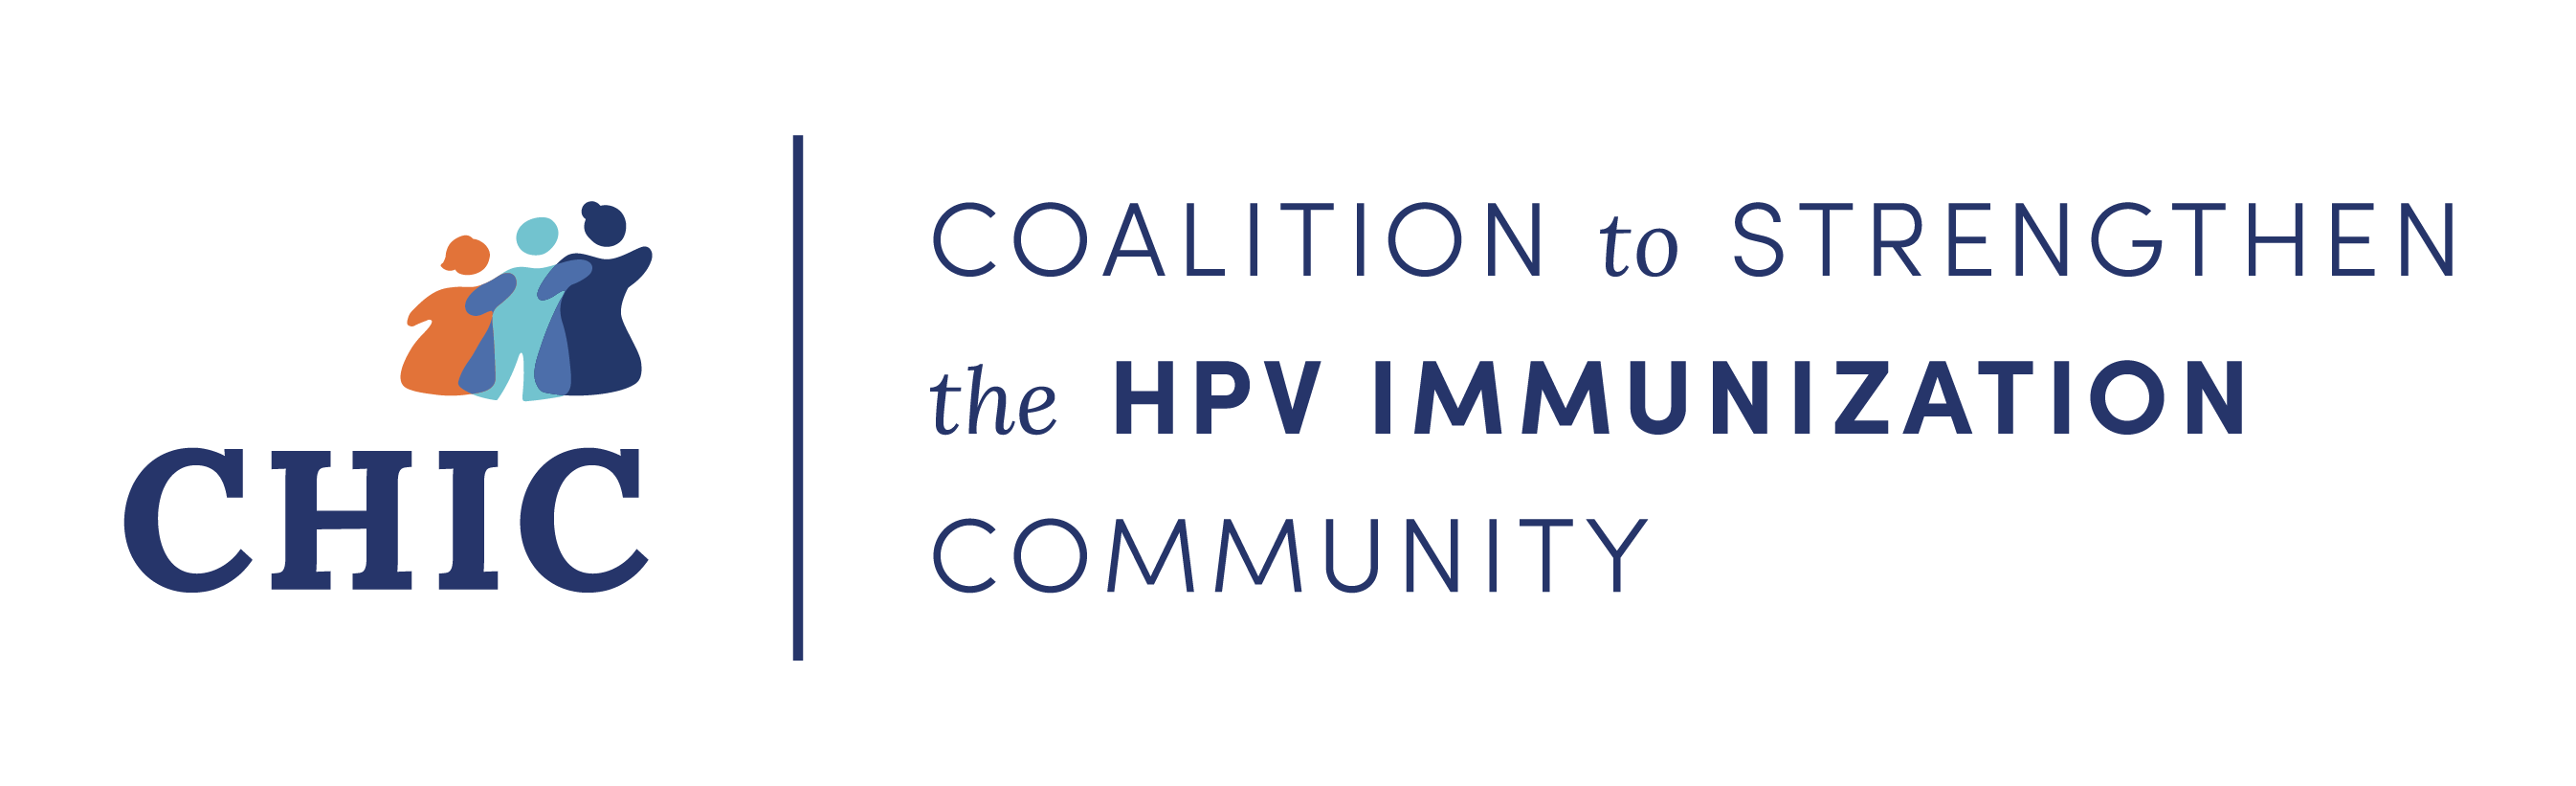 Coalition to Strengthen the HPV Immunization Community (CHIC) Logo